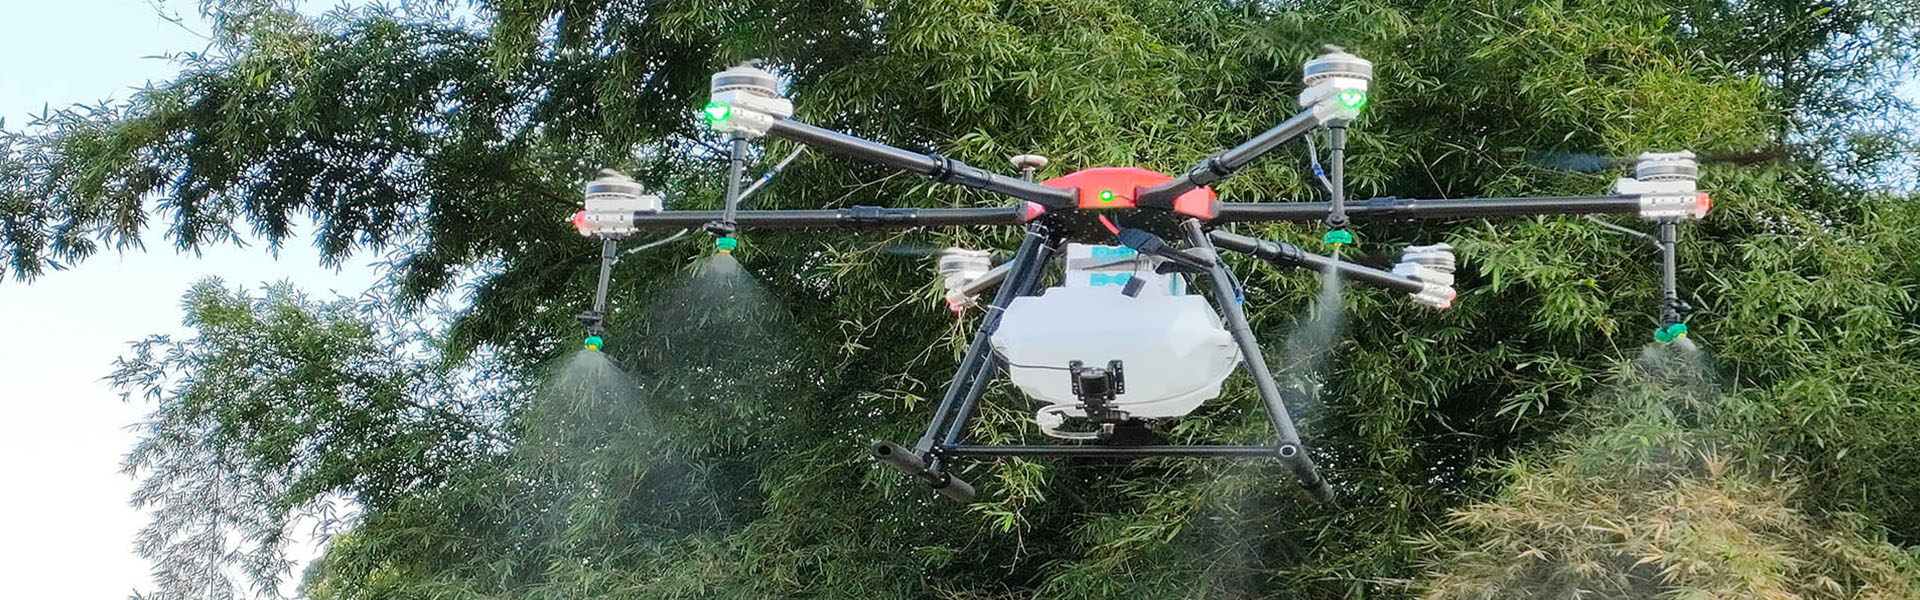 UAV การเกษตร, การป้องกันพืช UAV, อุปกรณ์เสริม UAV การเกษตร,Shenzhen fnyuav technology co.LTD